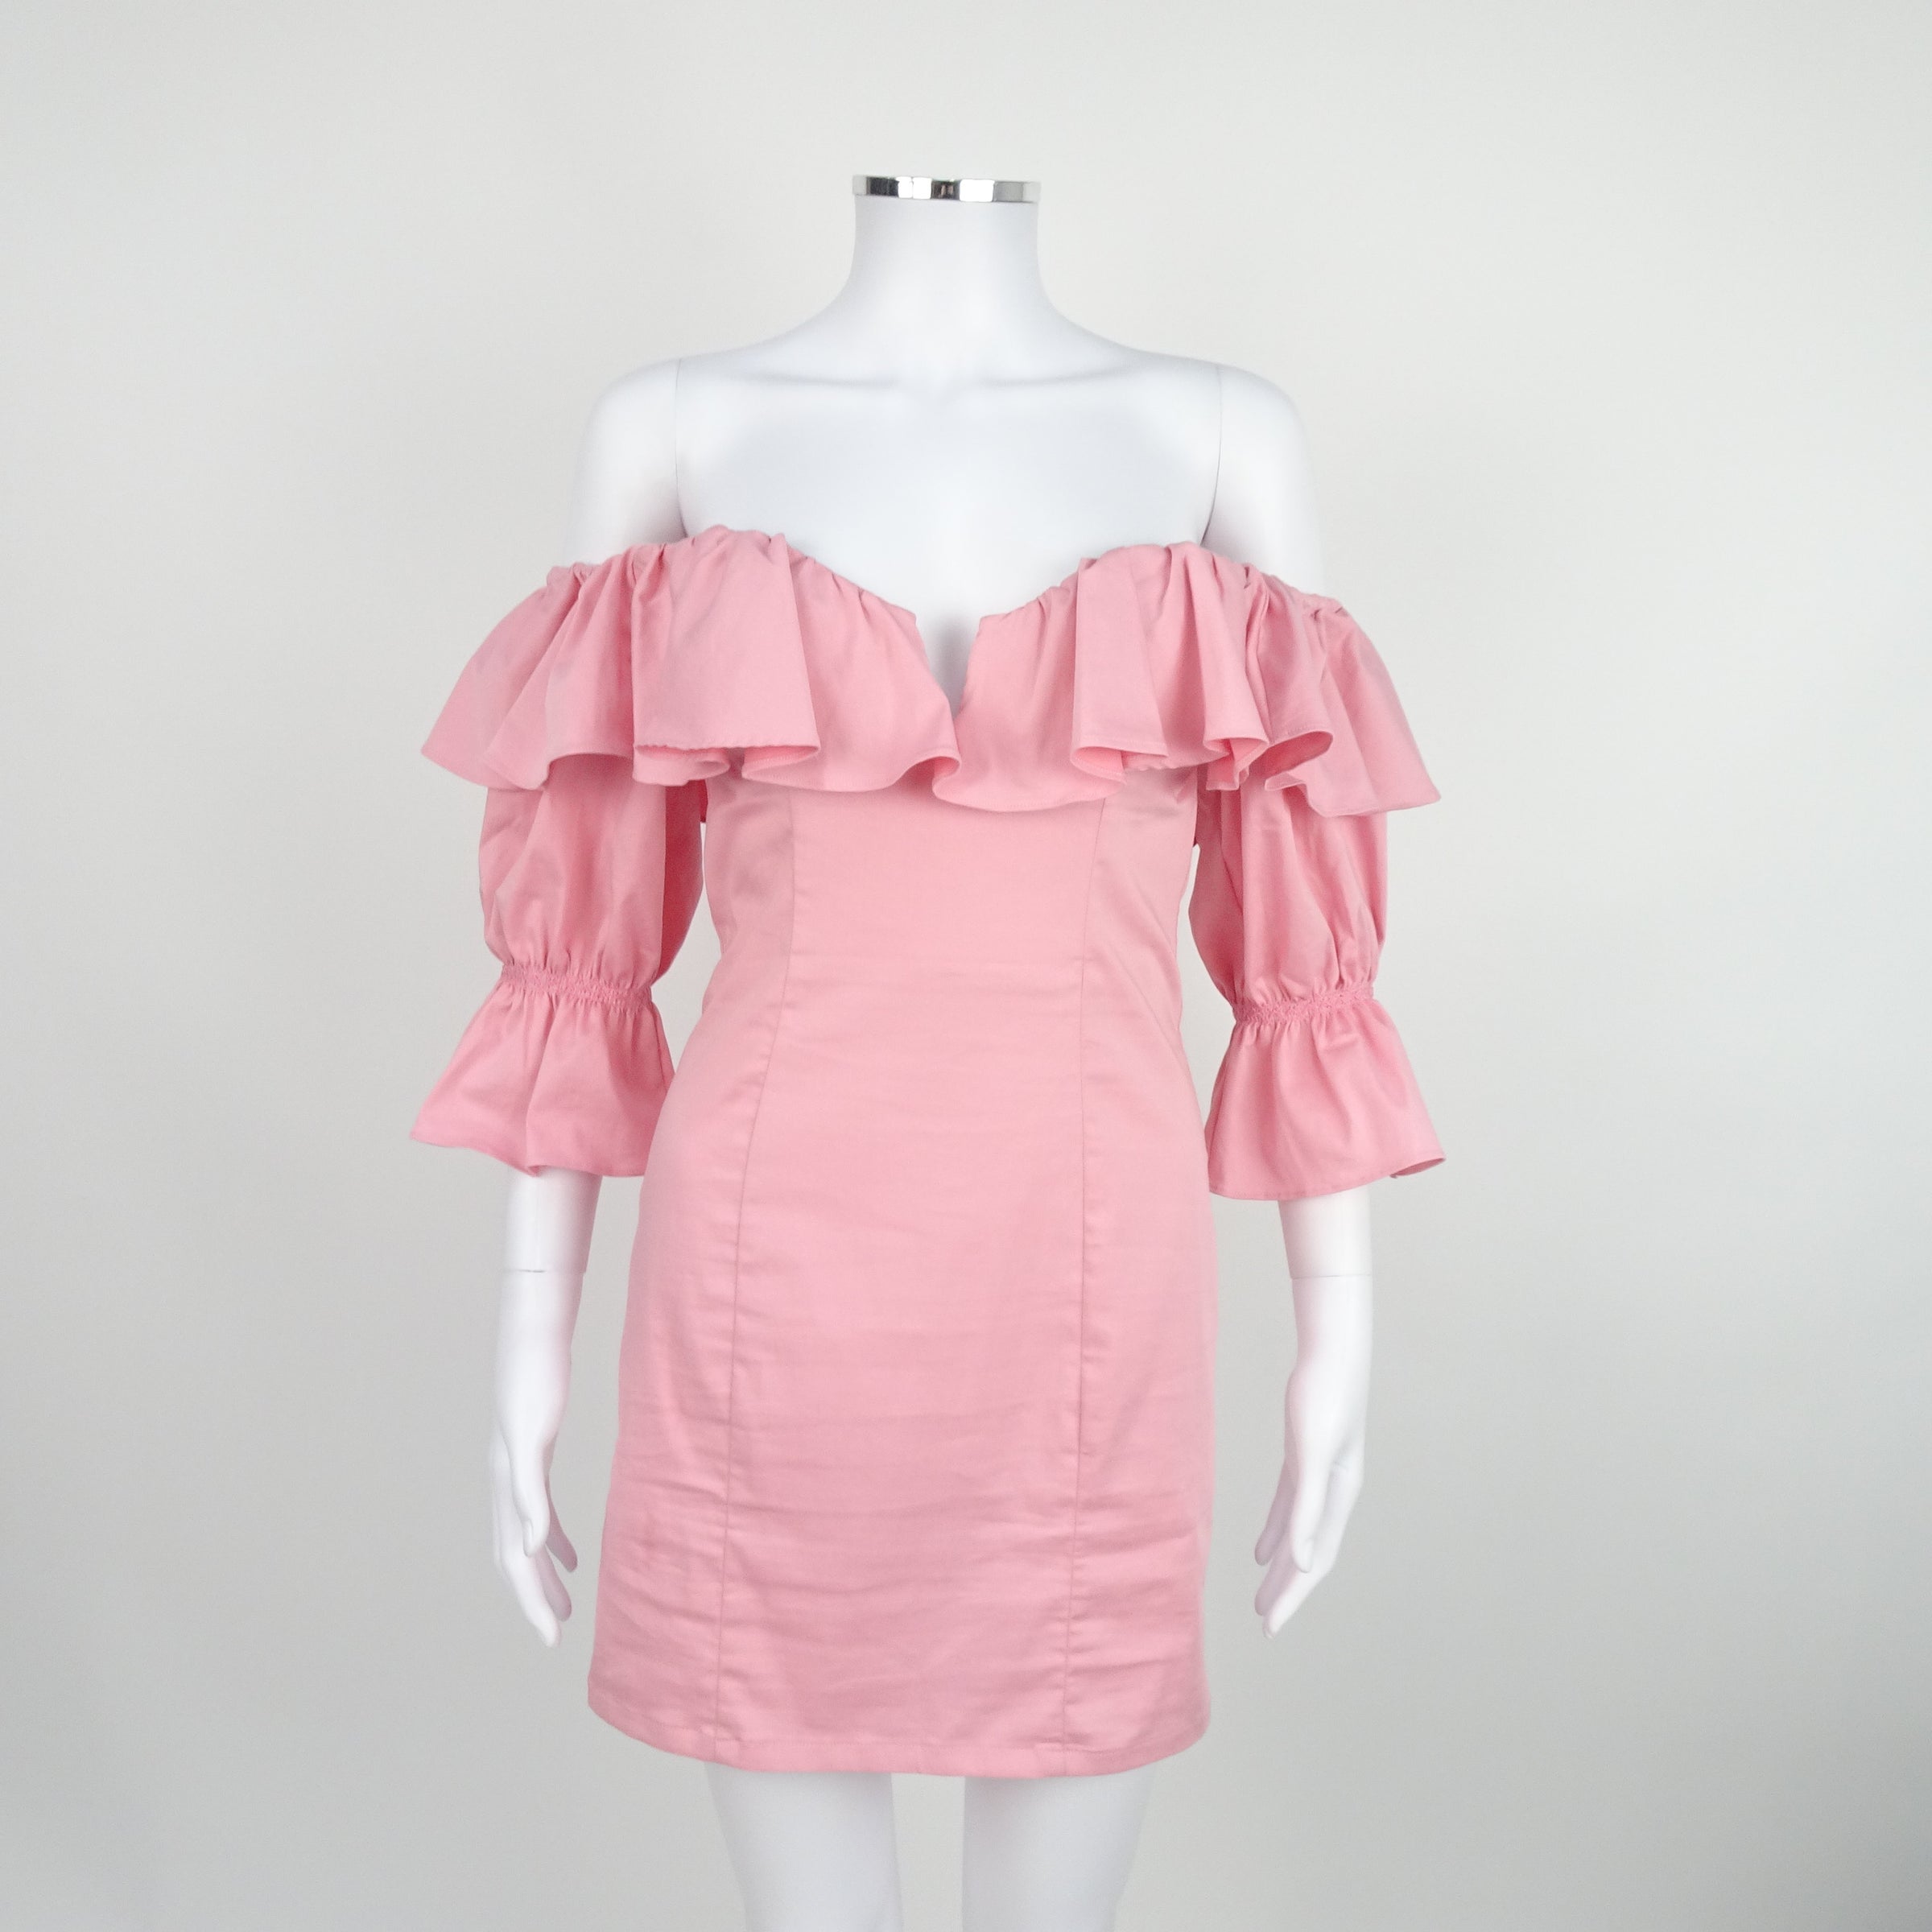 Camila Coelho Violet Mini Dress in Baby Pink